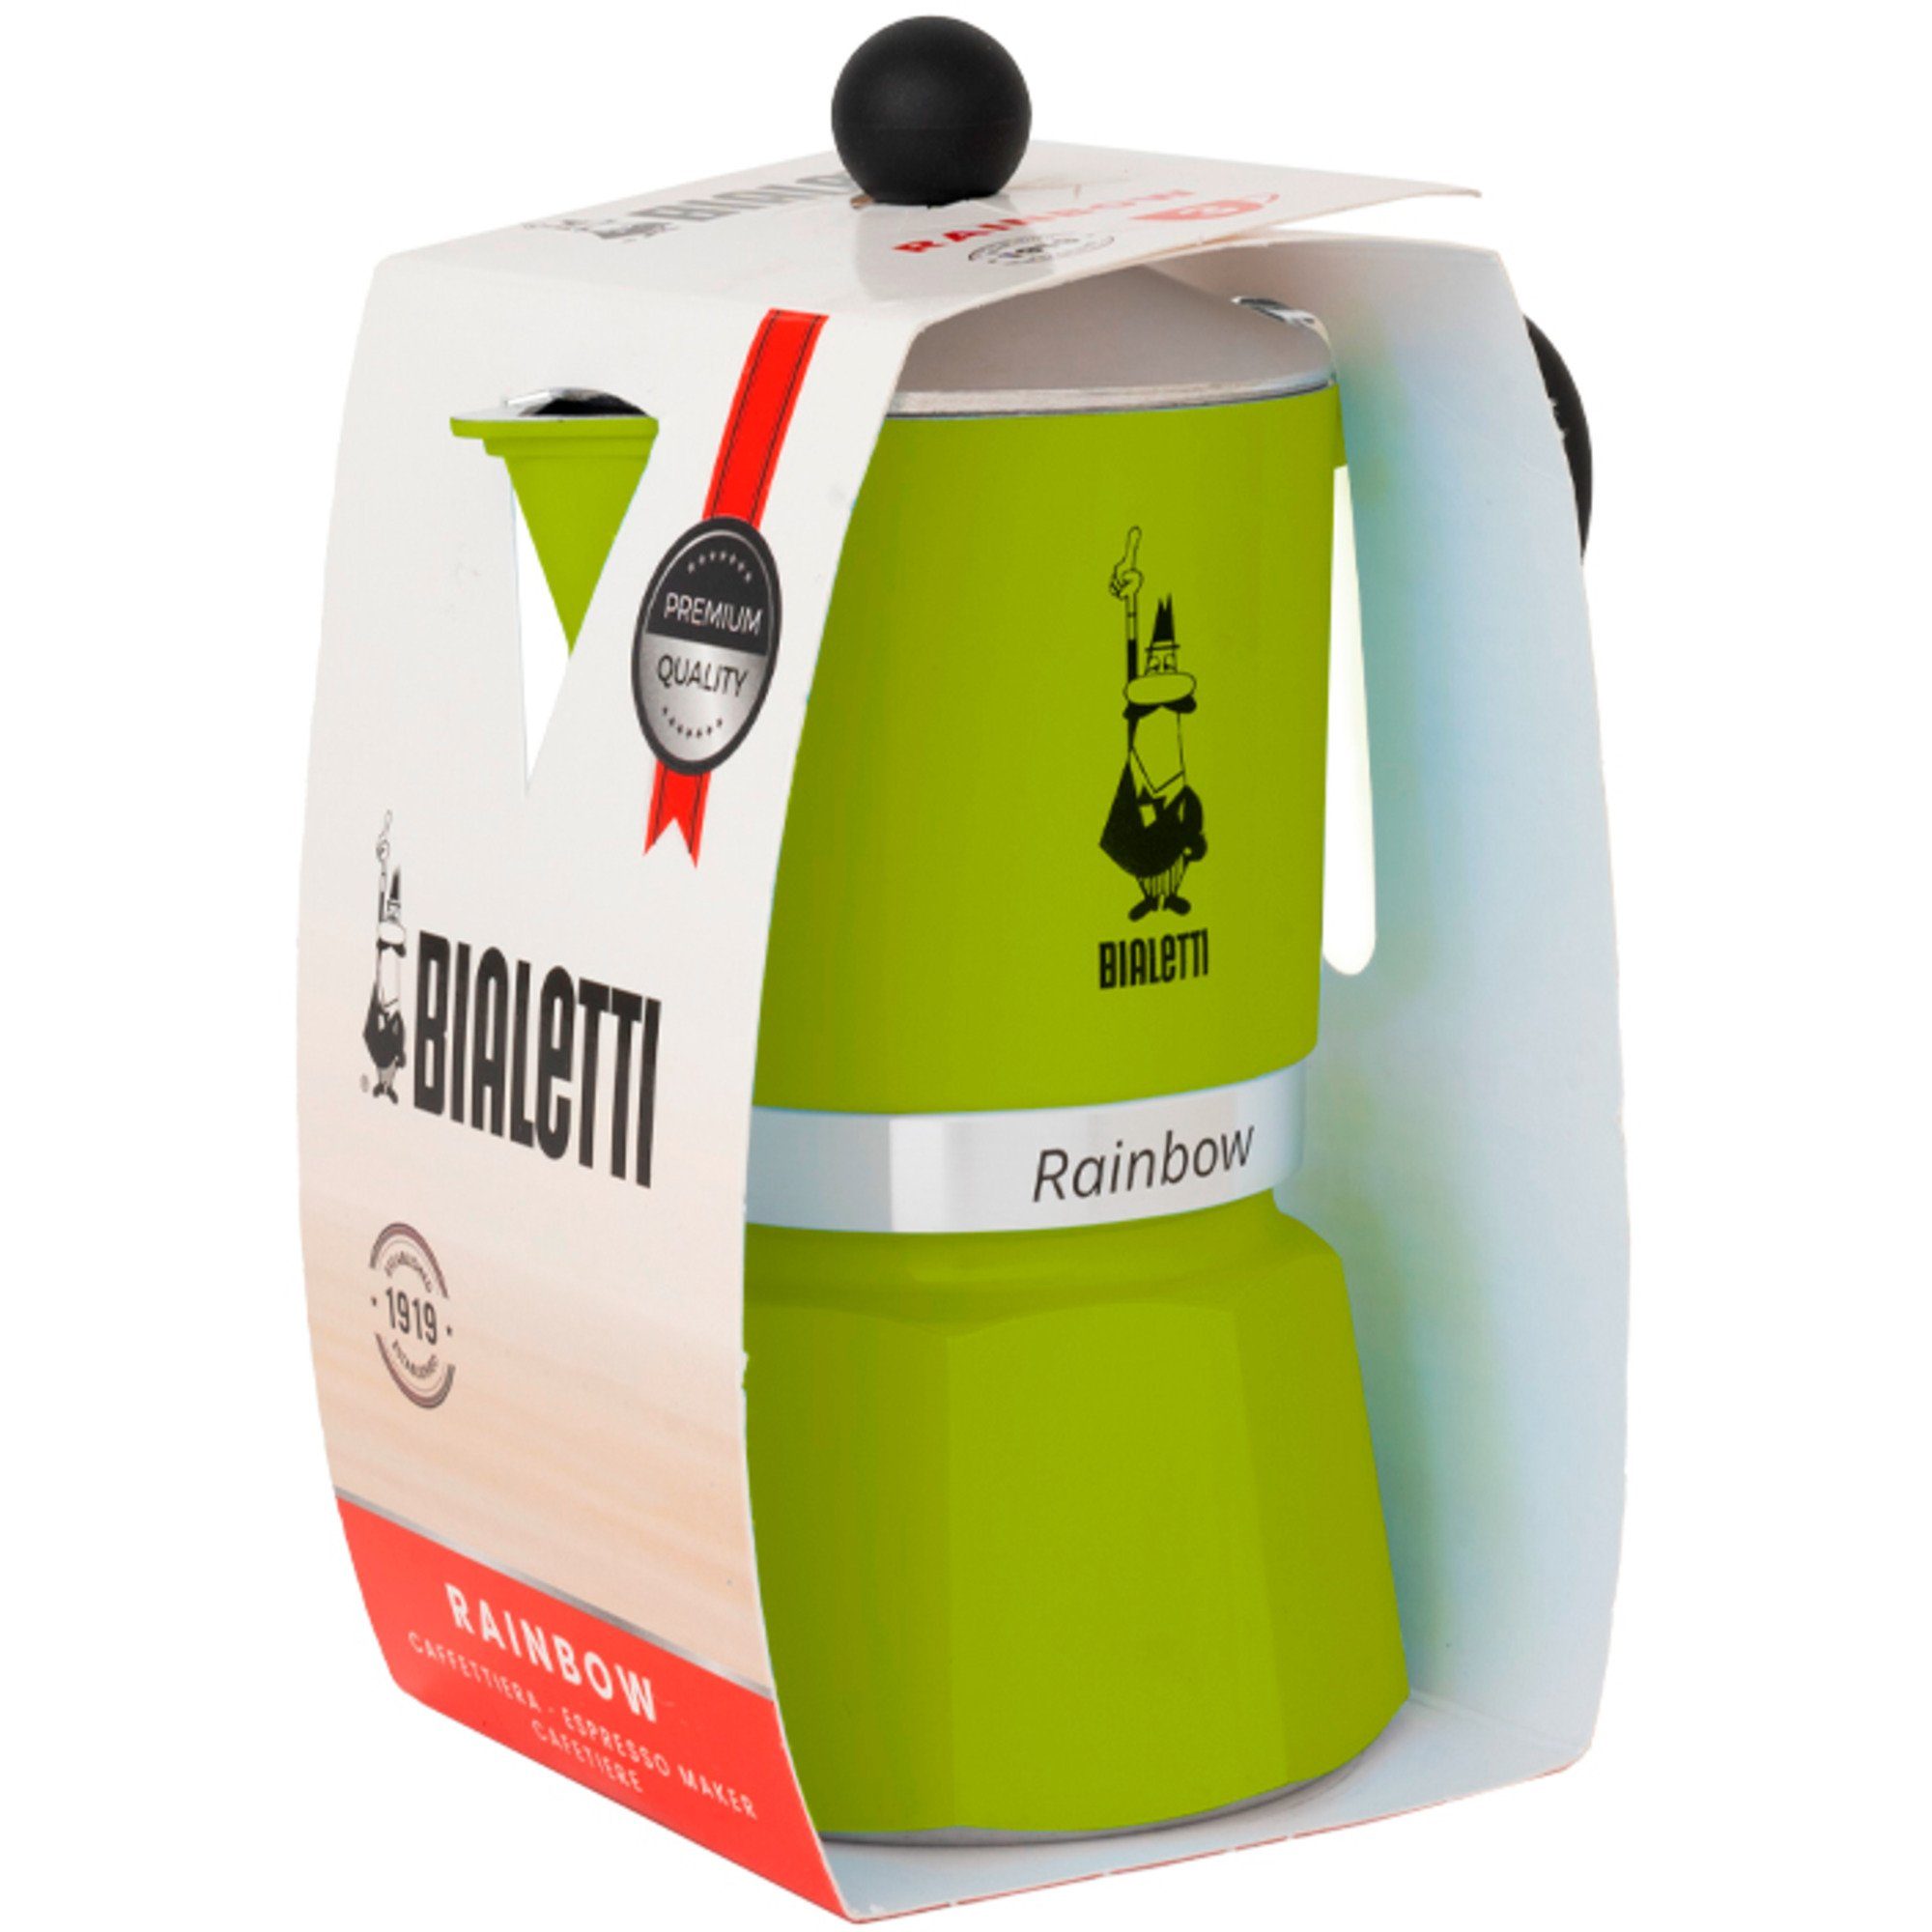 BIALETTI (1 Kaffeebereiter Rainbow, Bialetti Espressomaschine, Tasse)